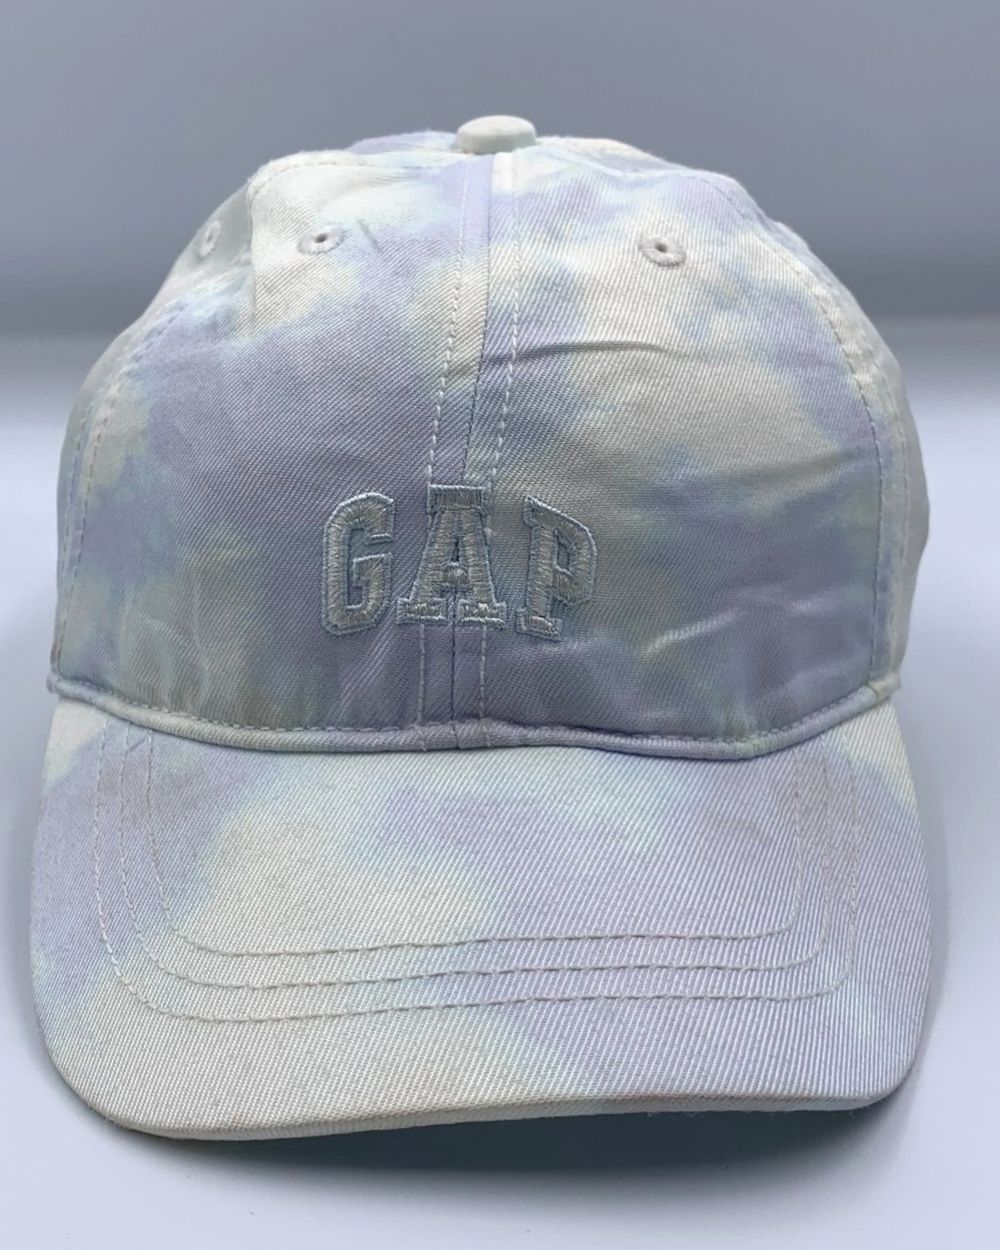 Gap Branded Original Branded Caps For Woman